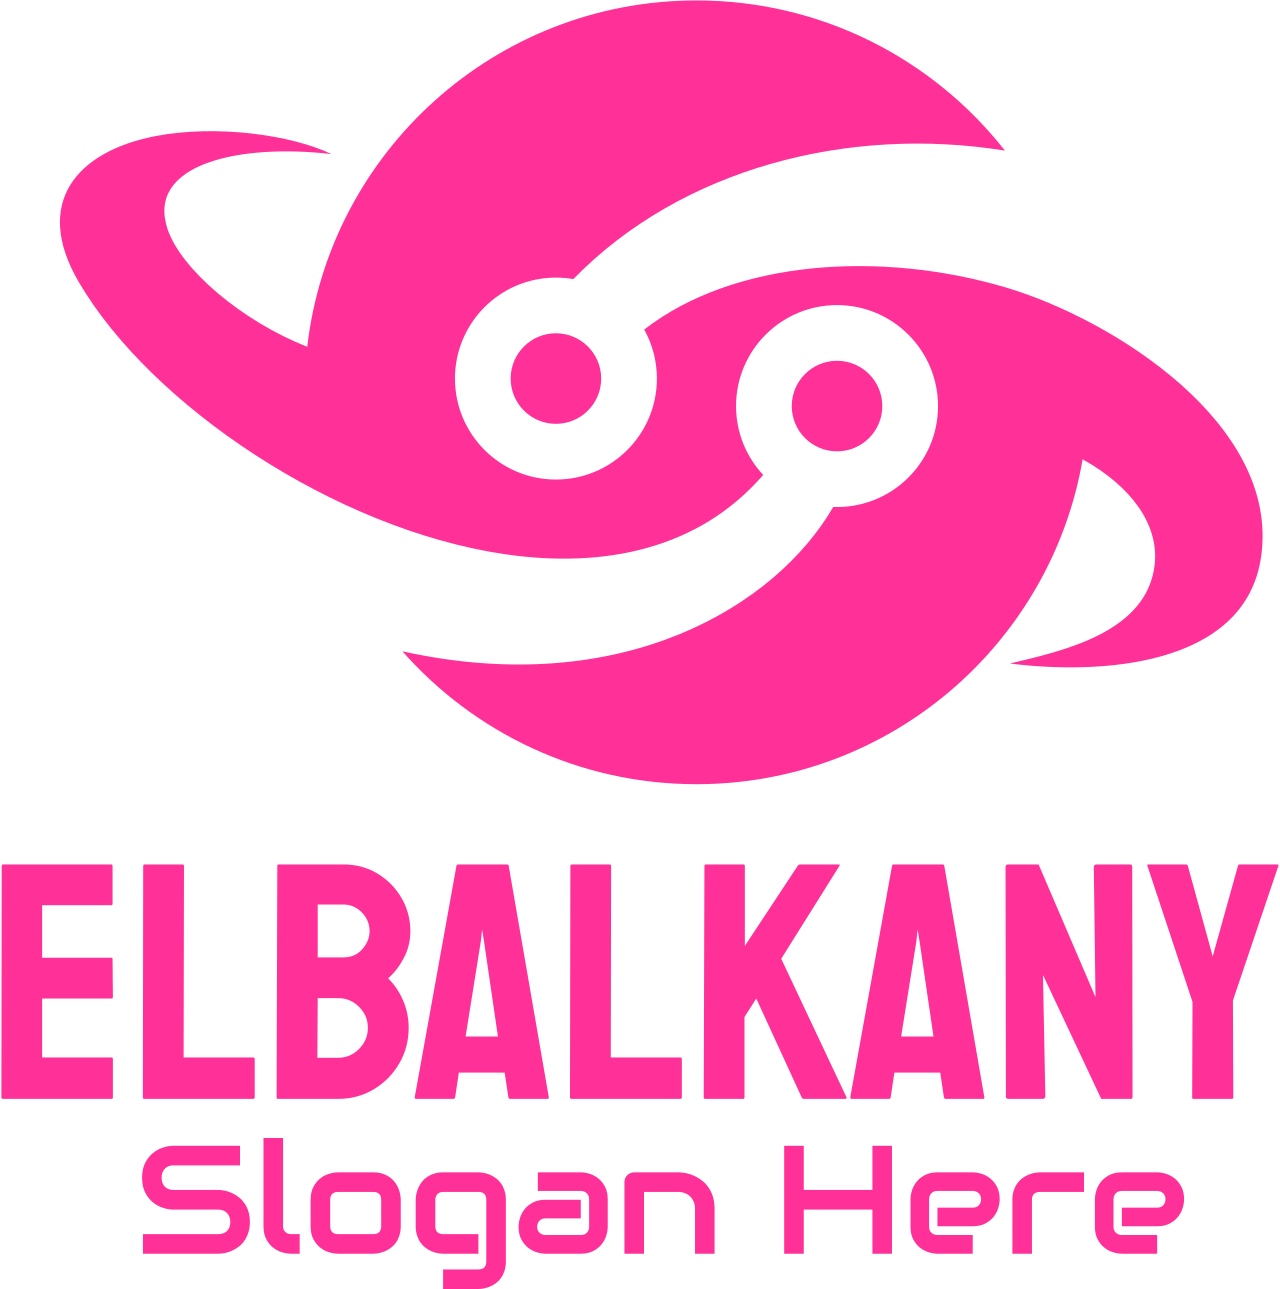 Elbalkany 's web page